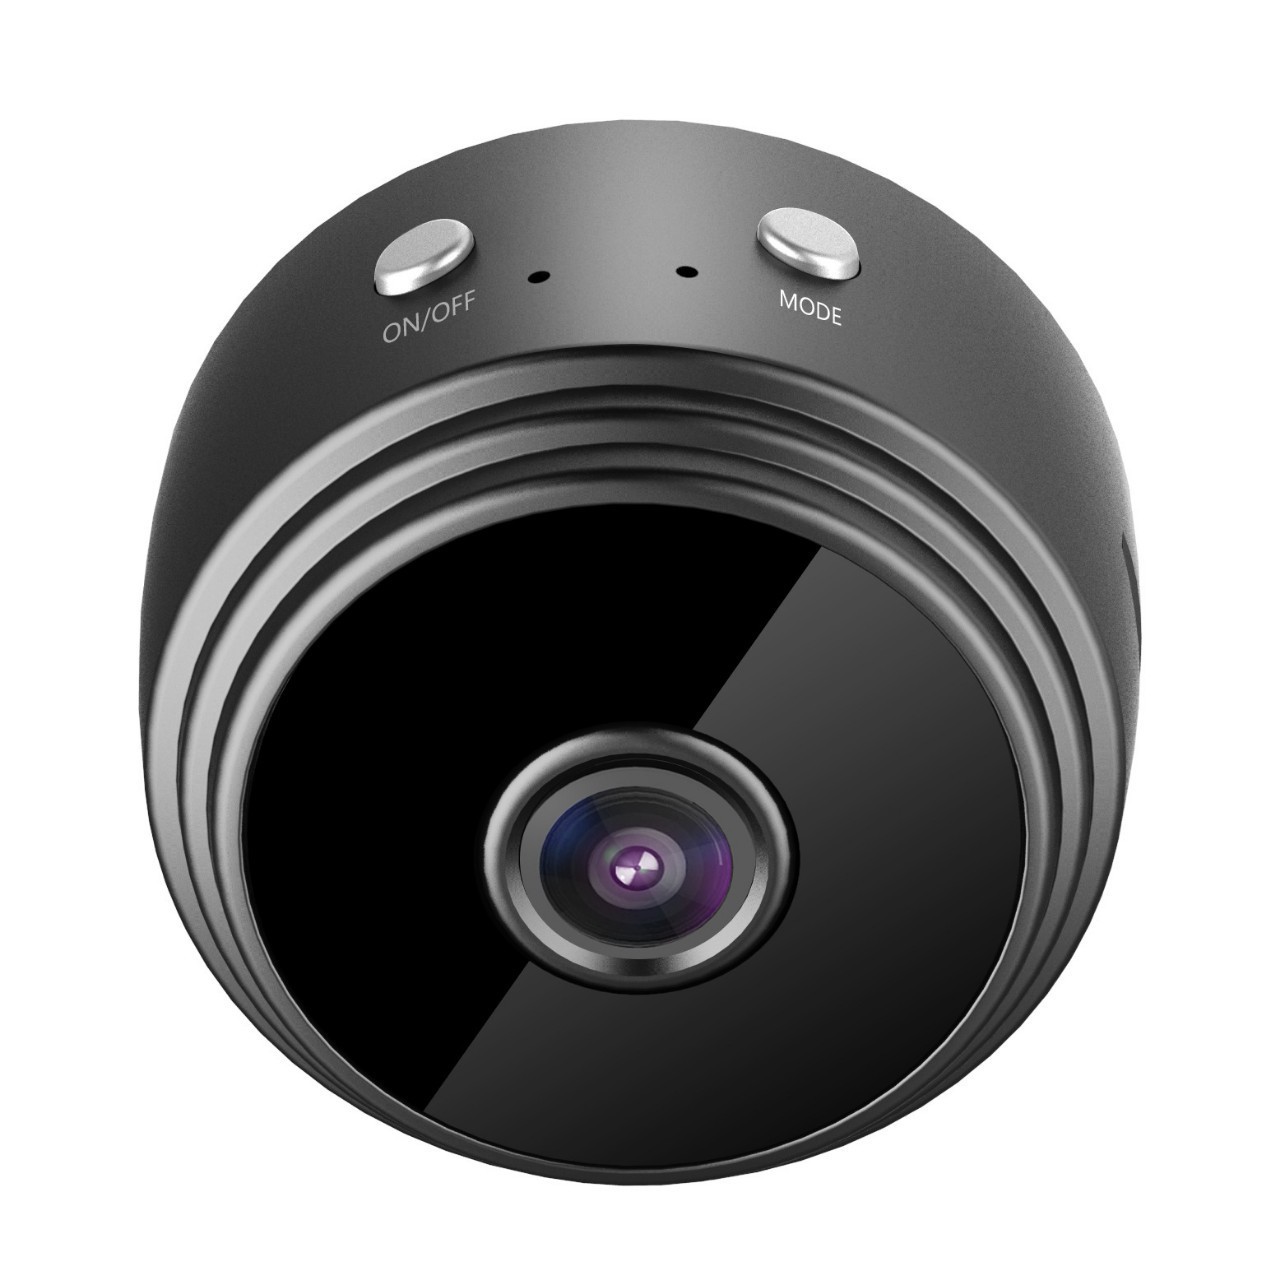  Hidden Cameras for Home Security, 1080p HD Mini Spy Camera Wi-Fi Wireless